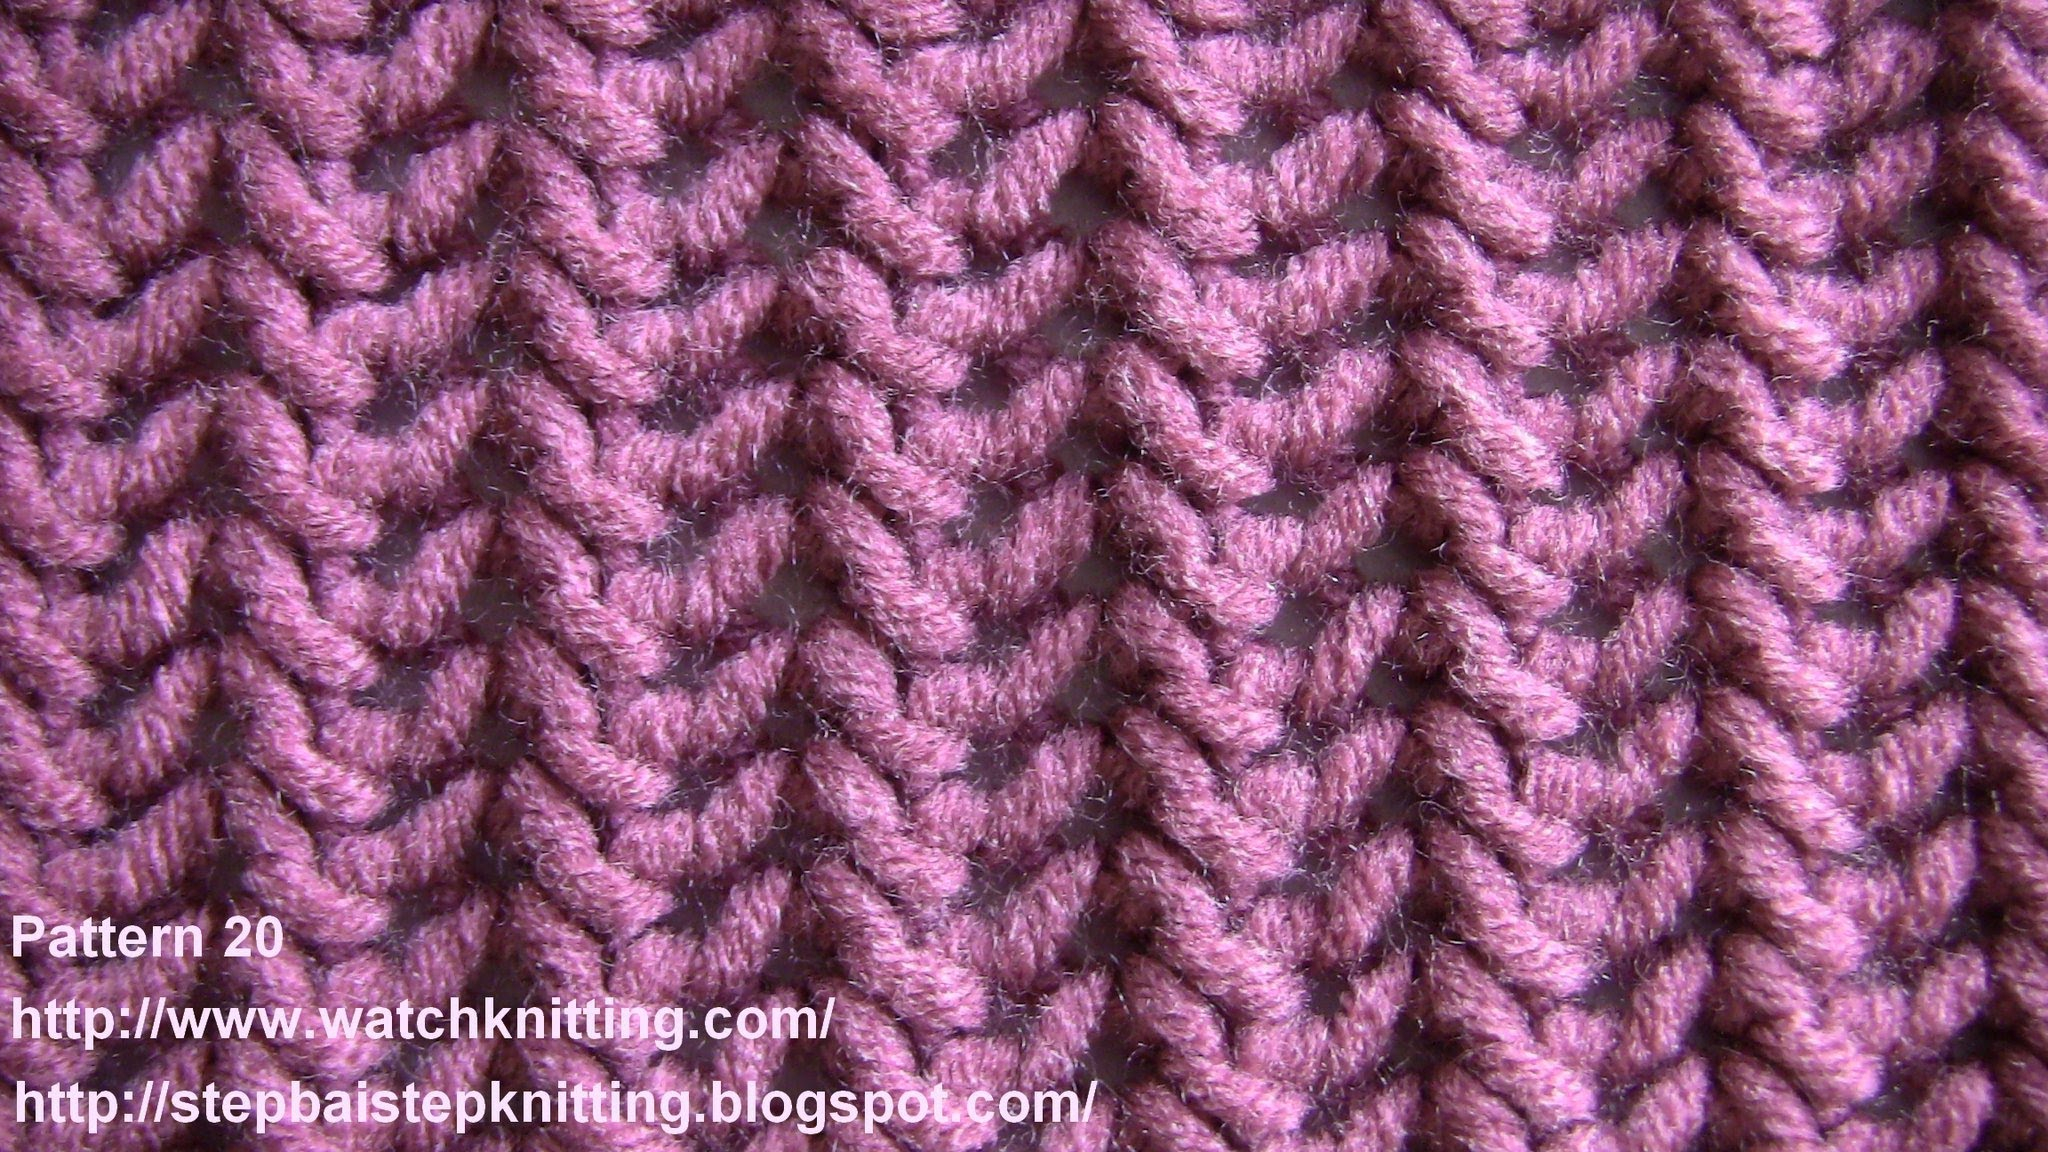 Knitting Patterns Designs More About Knitting Knitting Designs Thefashiontamer